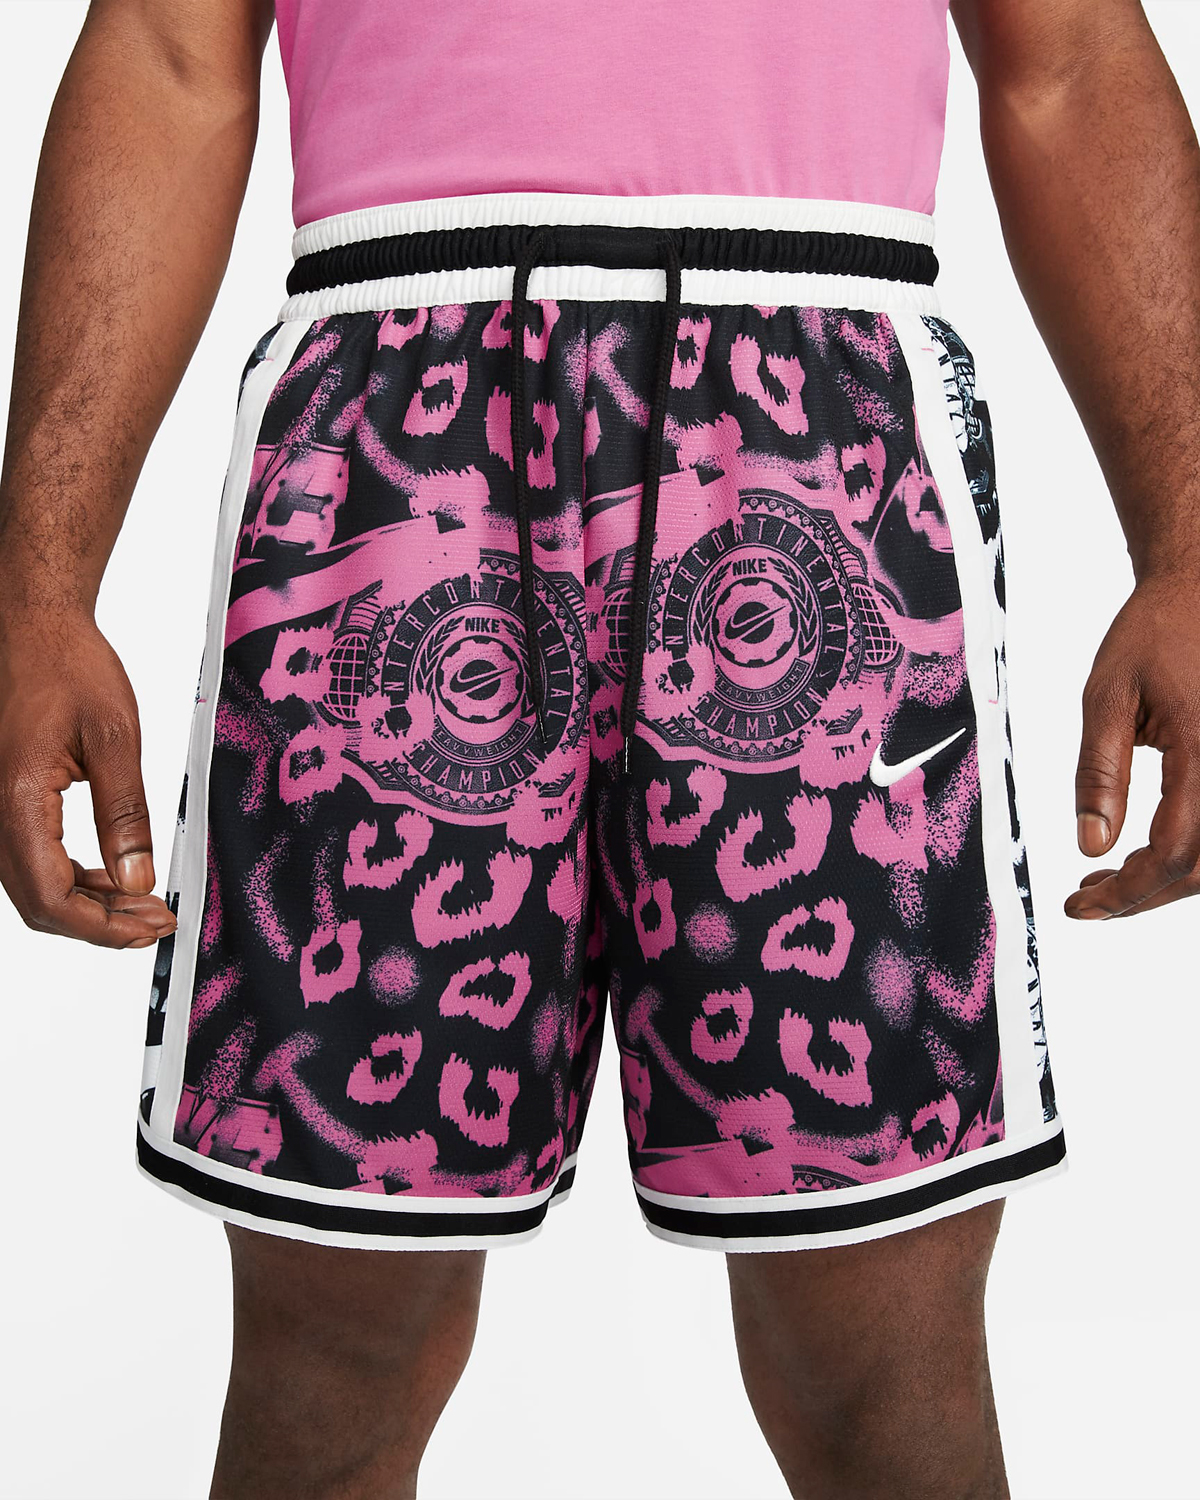 Nike-DNA-Basketball-Shorts-Pink